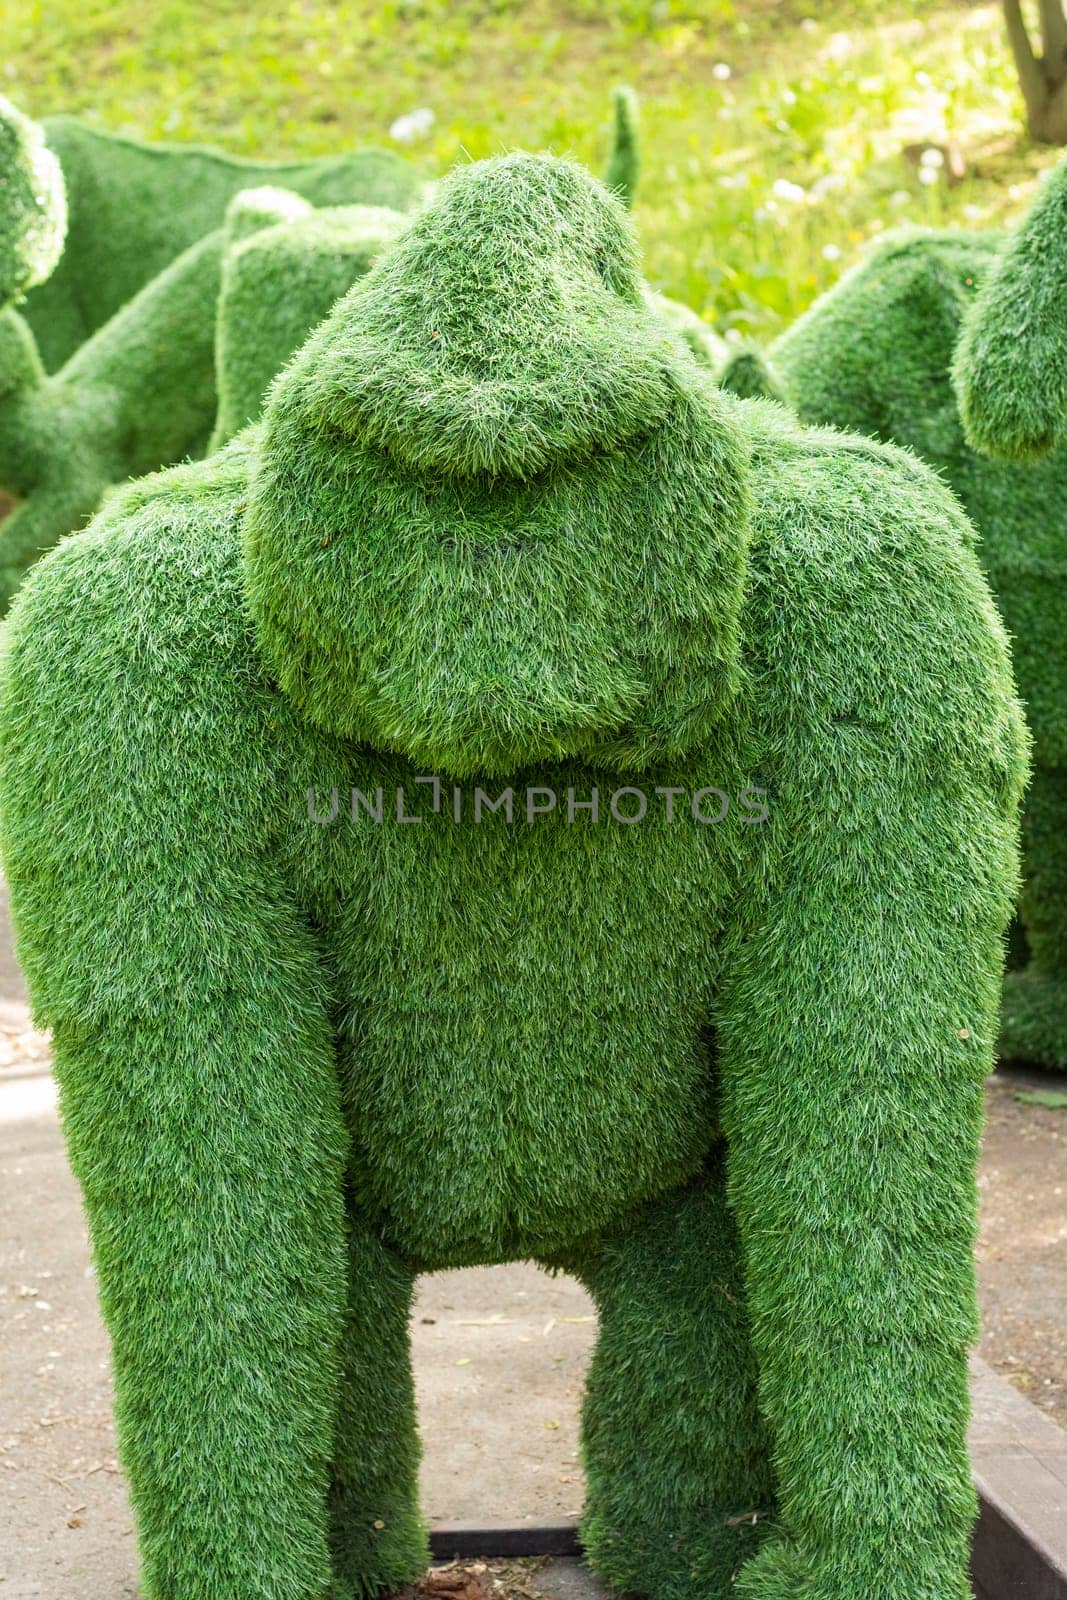 orangutan created from bushes at green animals. garden statues, sculptures. by Suietska